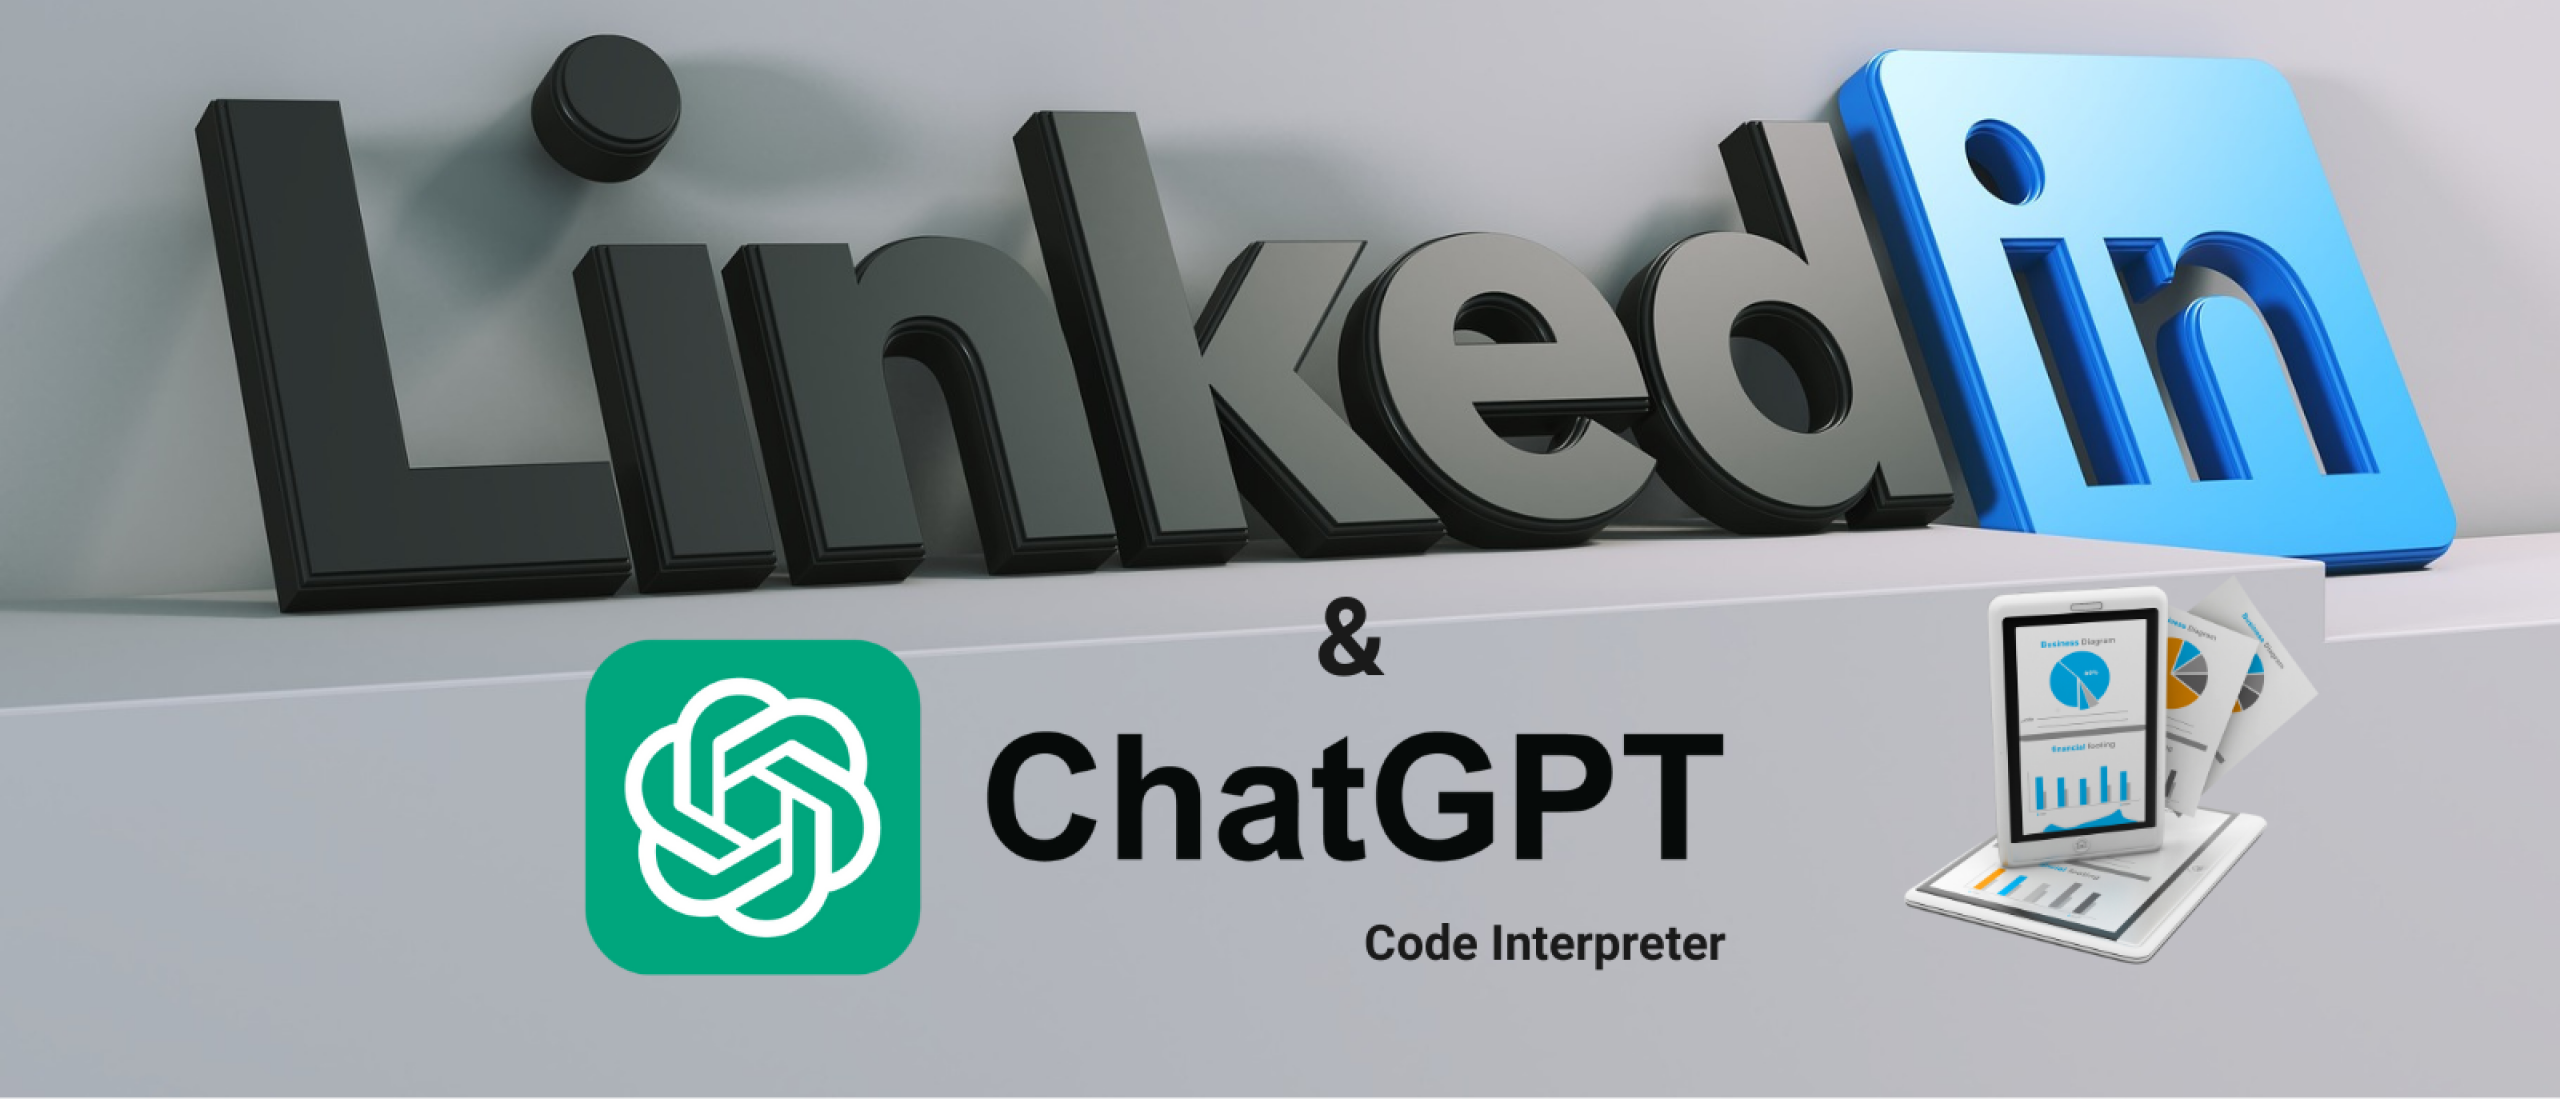 LinkedIn Recruiter and ChatGPT Code Interpreter part 1